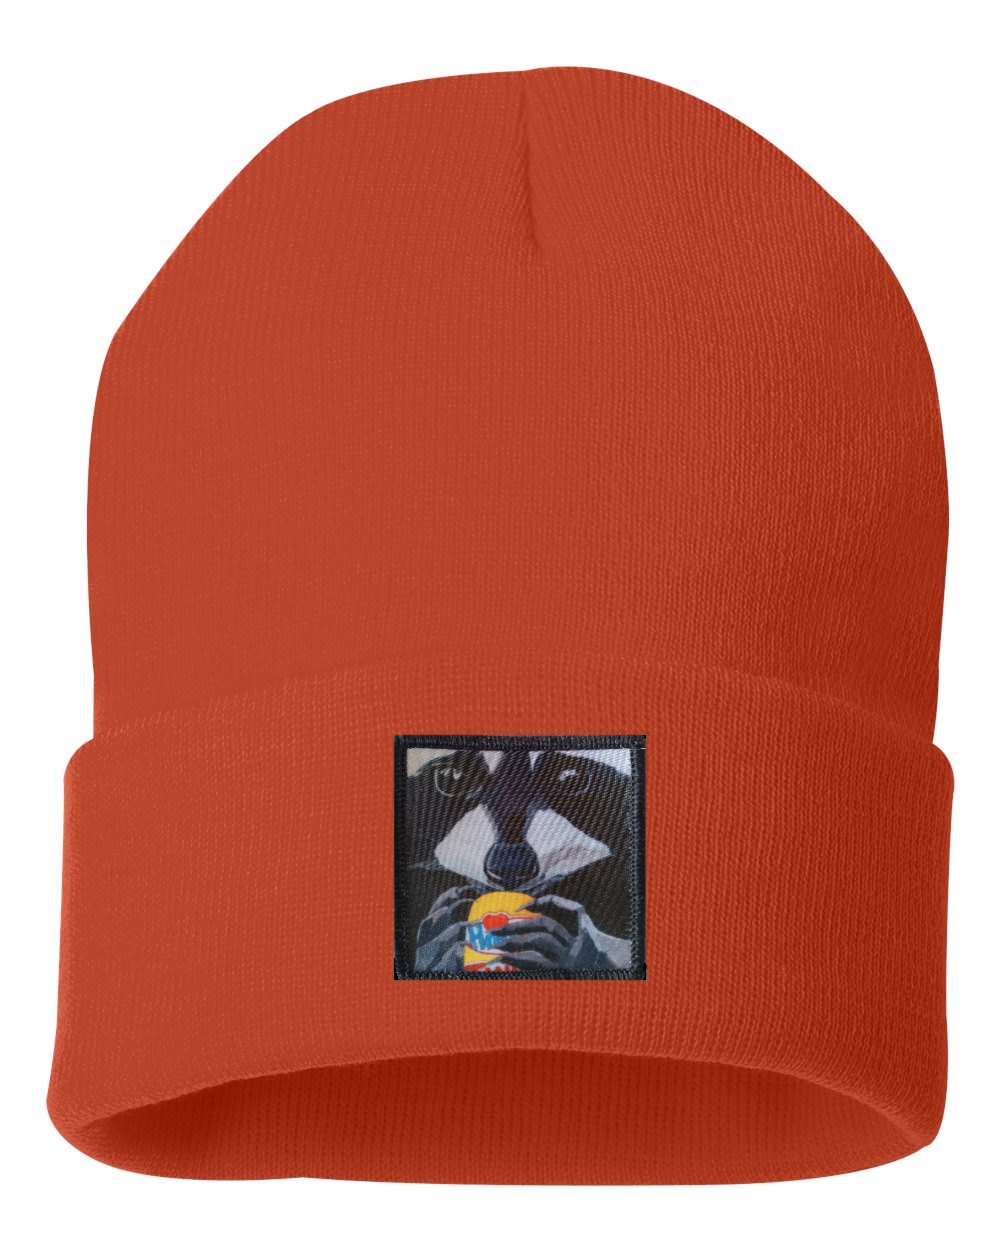 The Snack Kid Raccoon Beanie Hats Flyn Costello Brunt Orange  